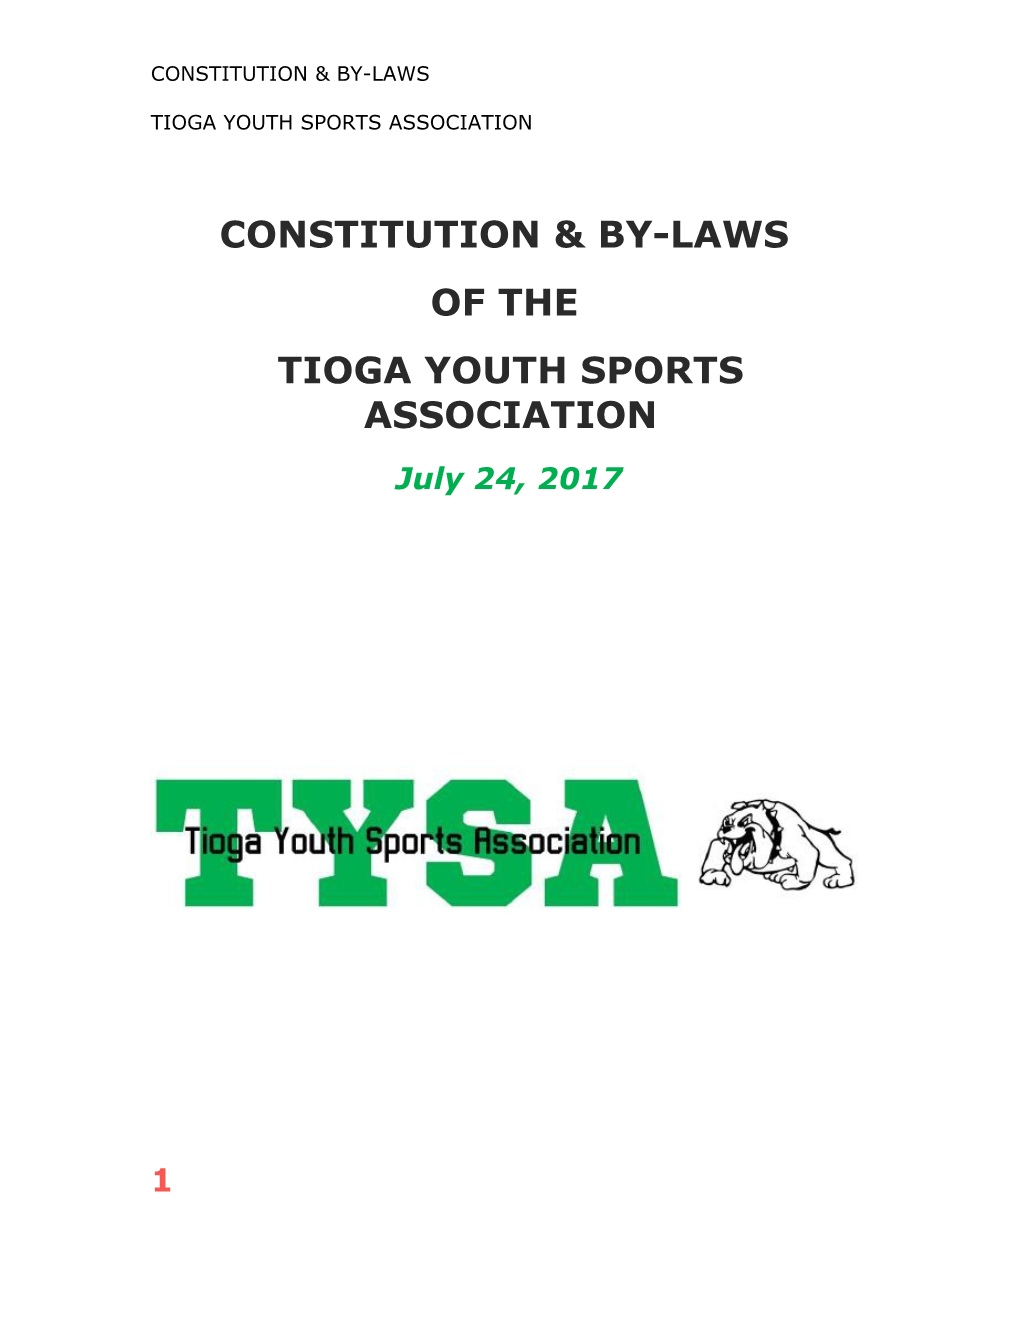 Tioga Youth Sports Association